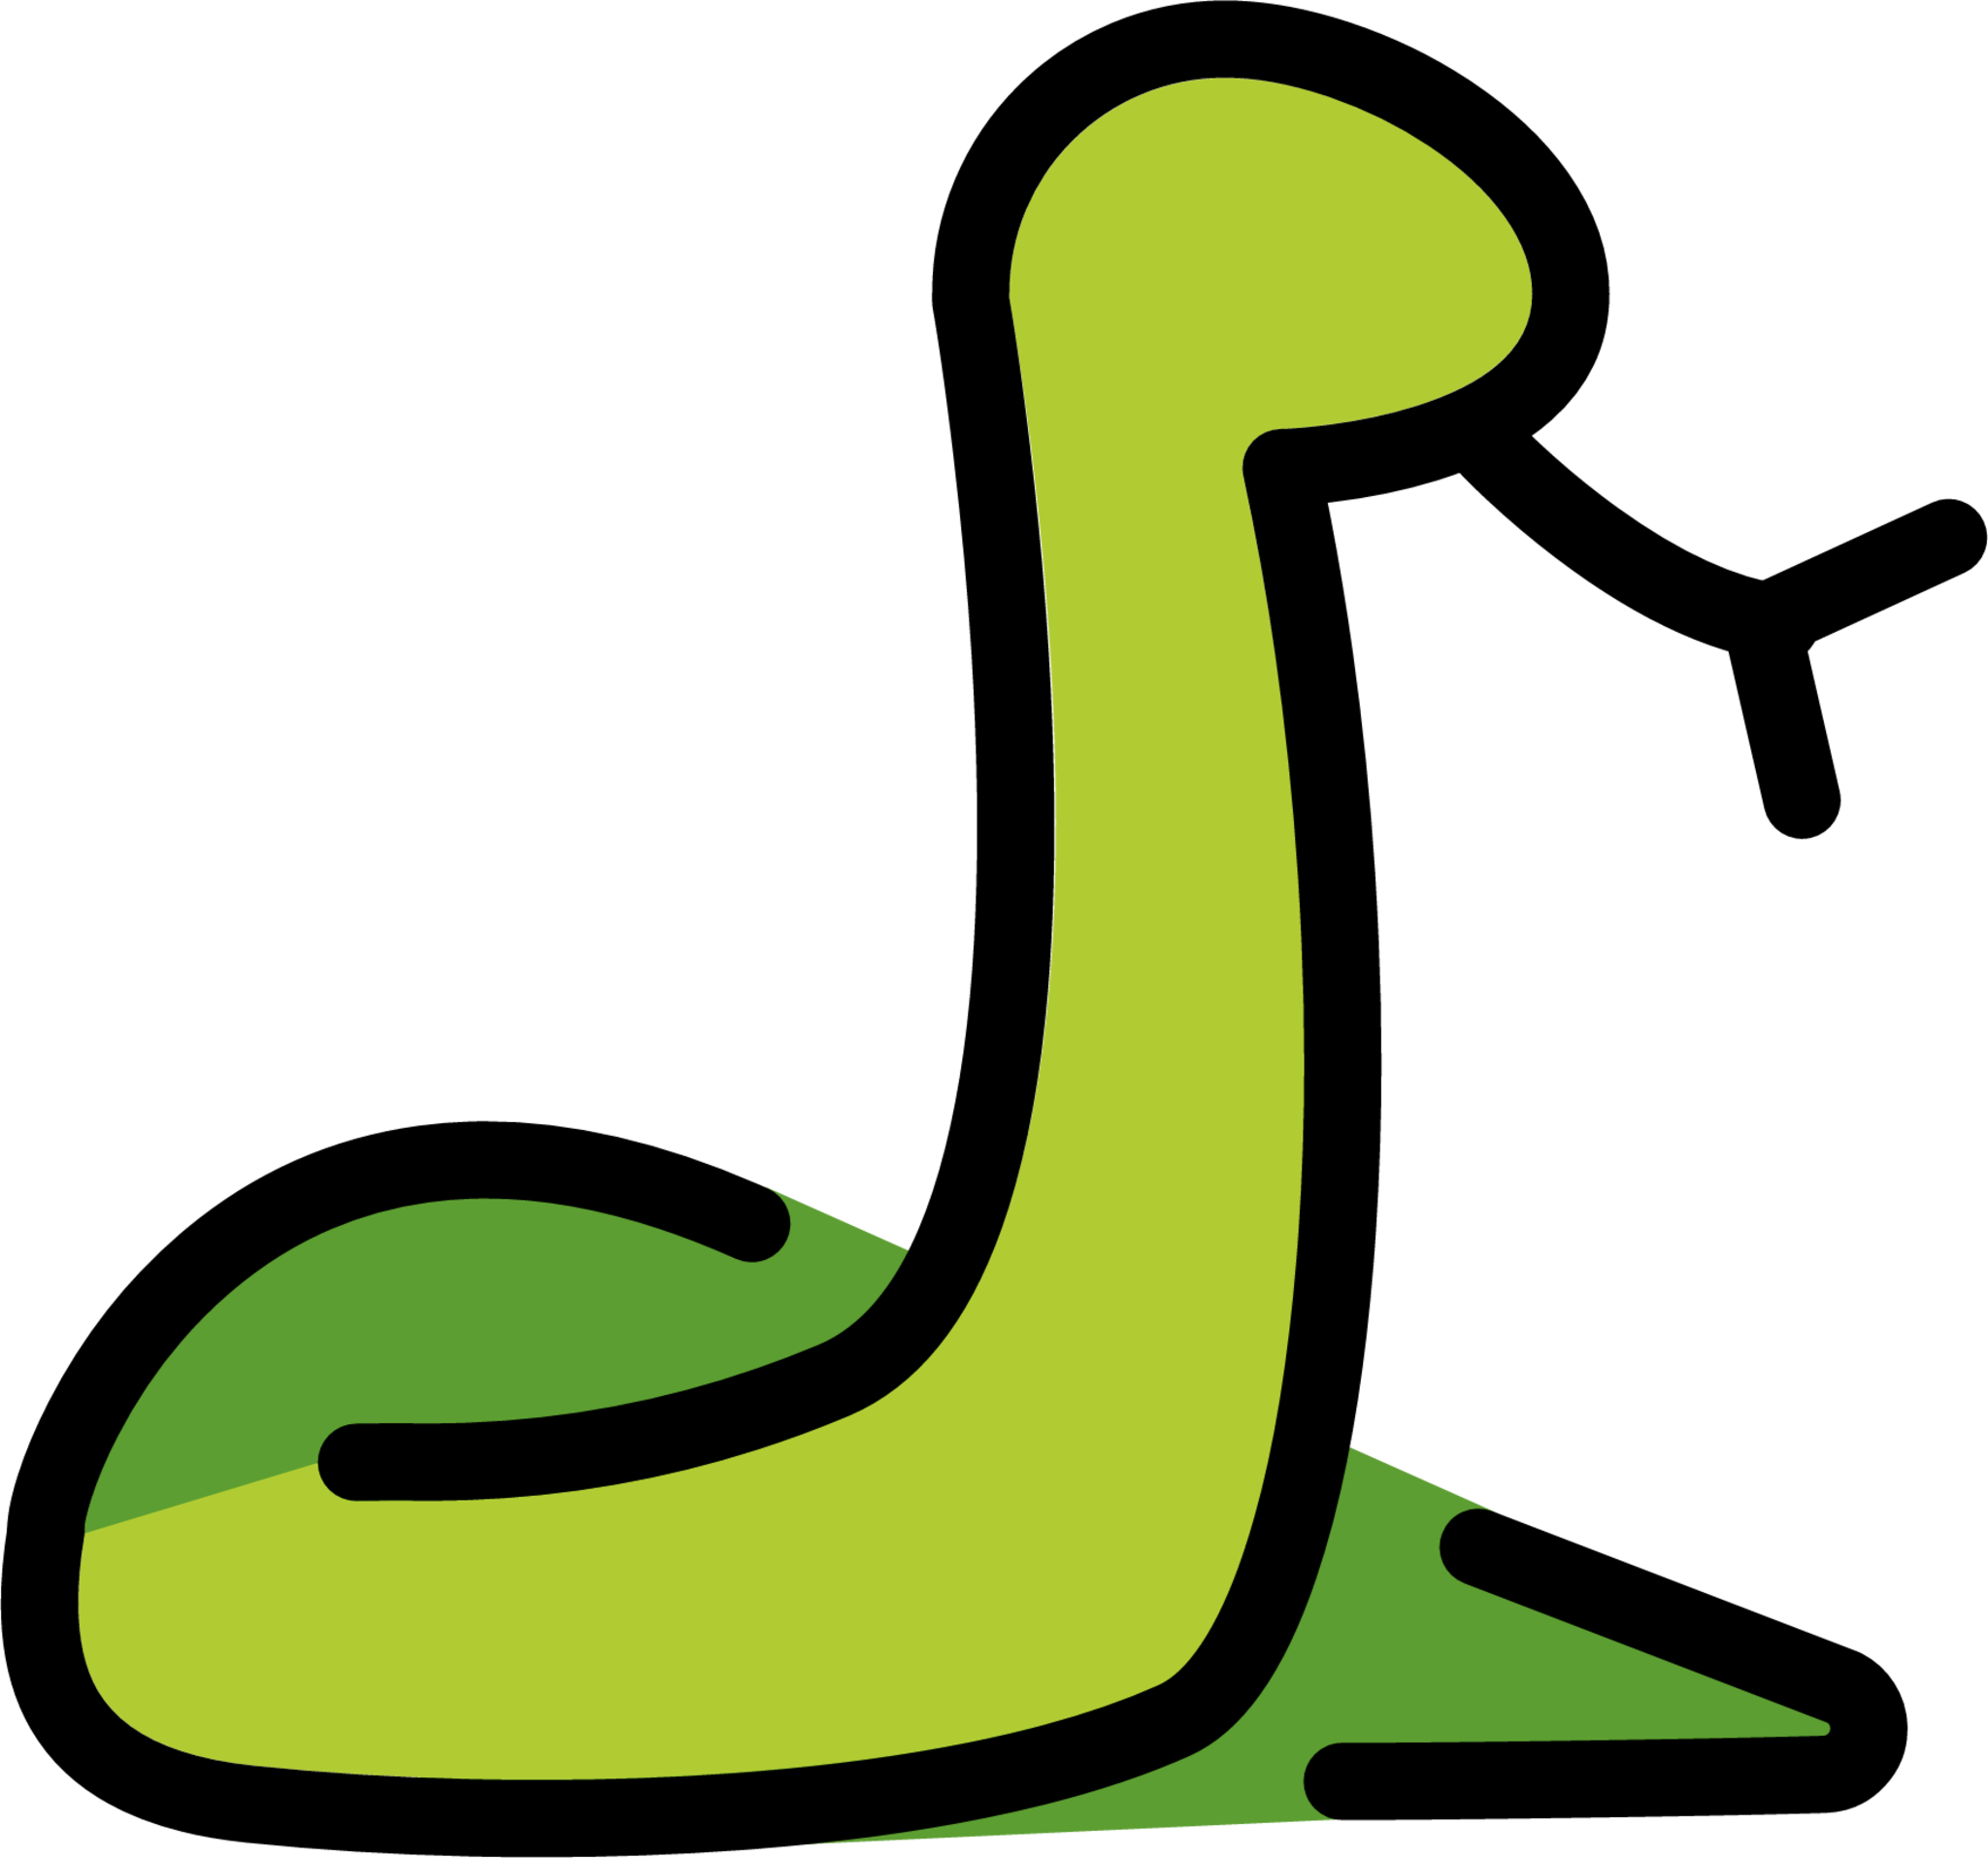 black 2 4 snake emoji